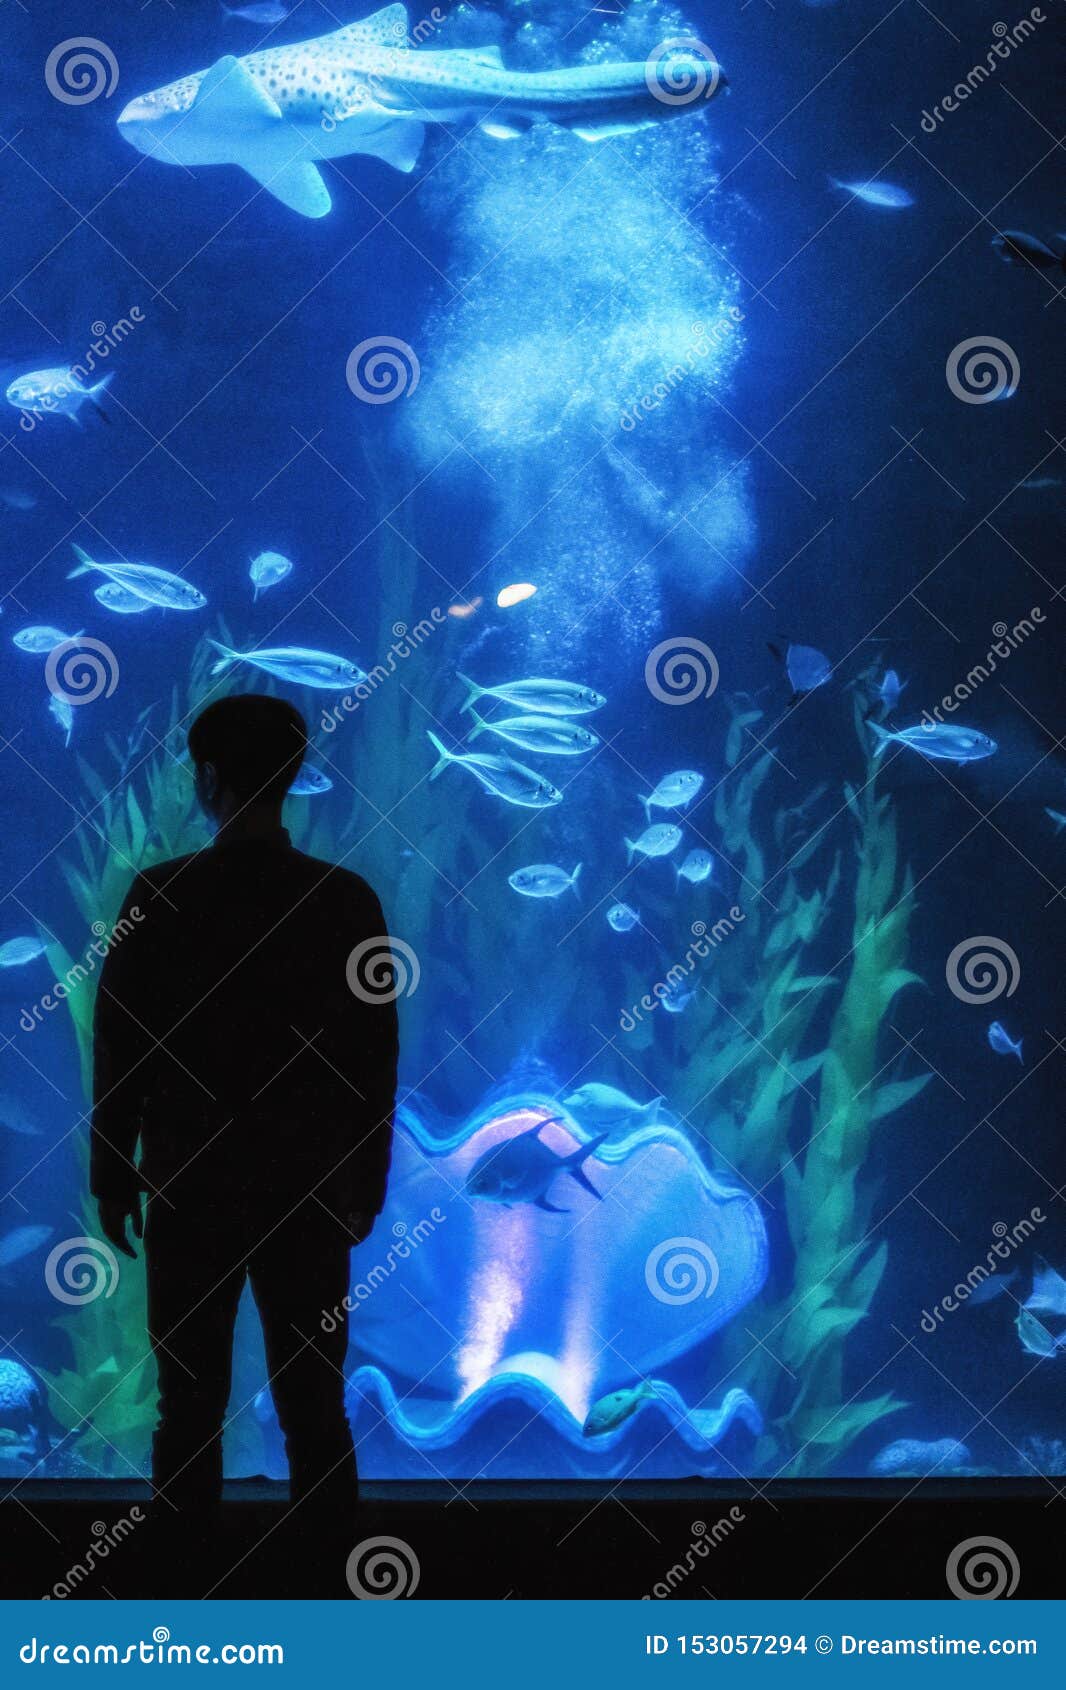 Futuristic Picture Water Aquarium Glow Sink Silhouettes Human